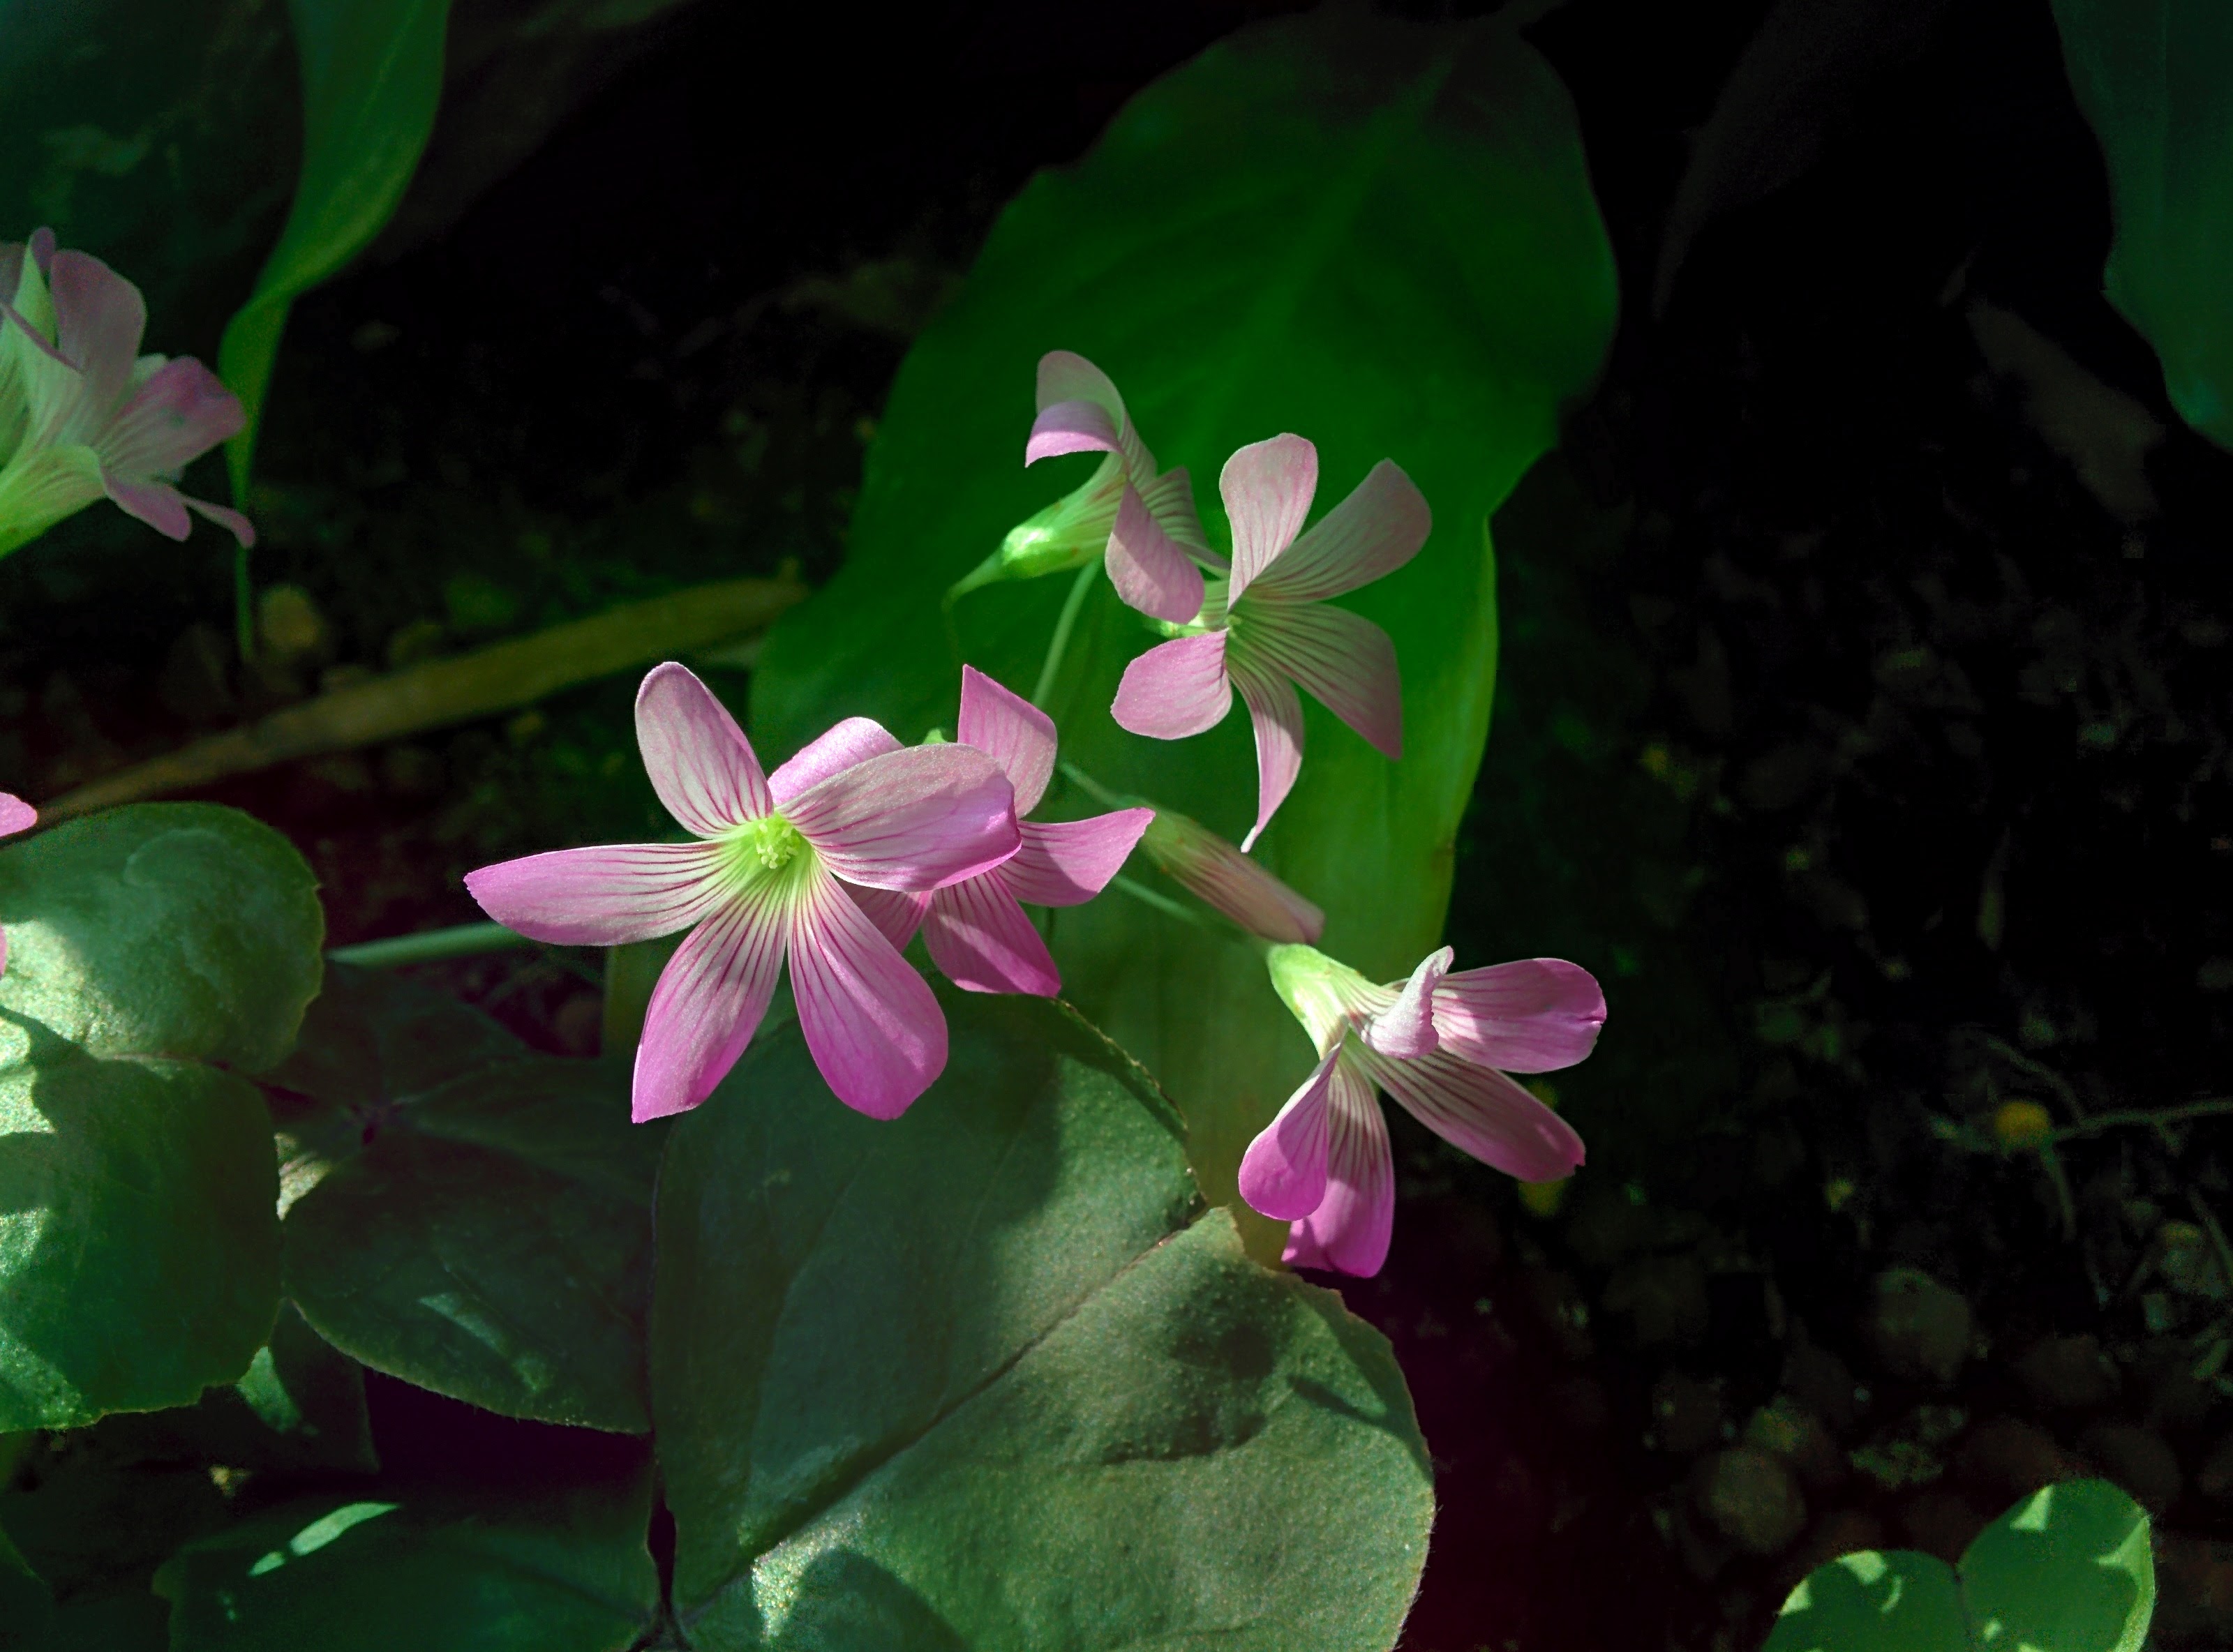 IMG_20151201_122230.jpg 분홍색 꽃이 핀 클로버를 닮은 조경식물... 덩이괭이밥